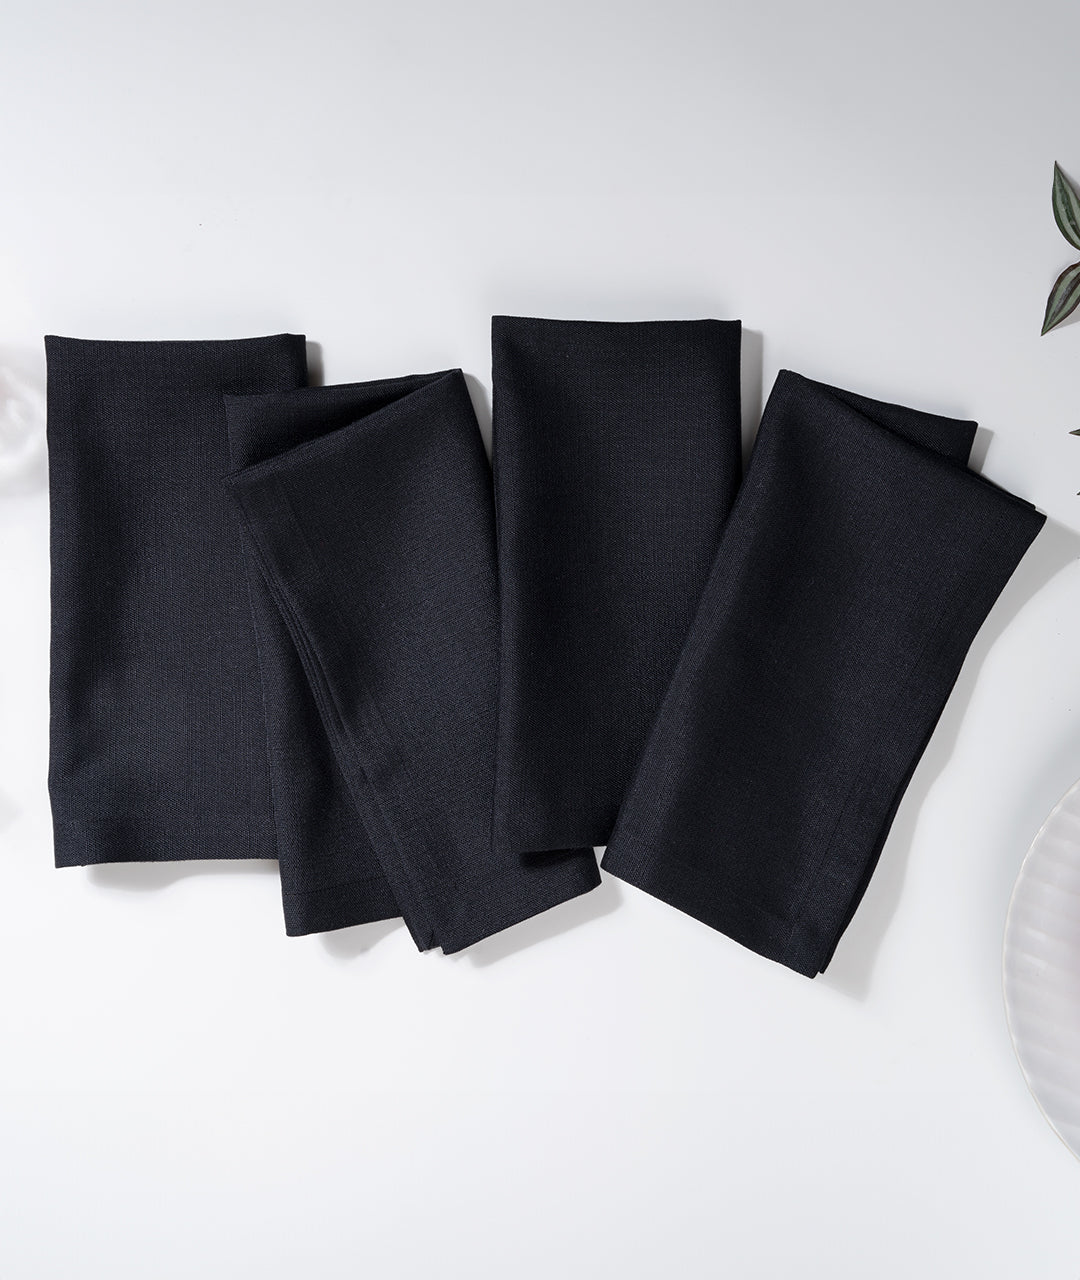 Black Linen Textured Dinner Napkins 20 x 20 Inch Set of 4 - Mitered Corner